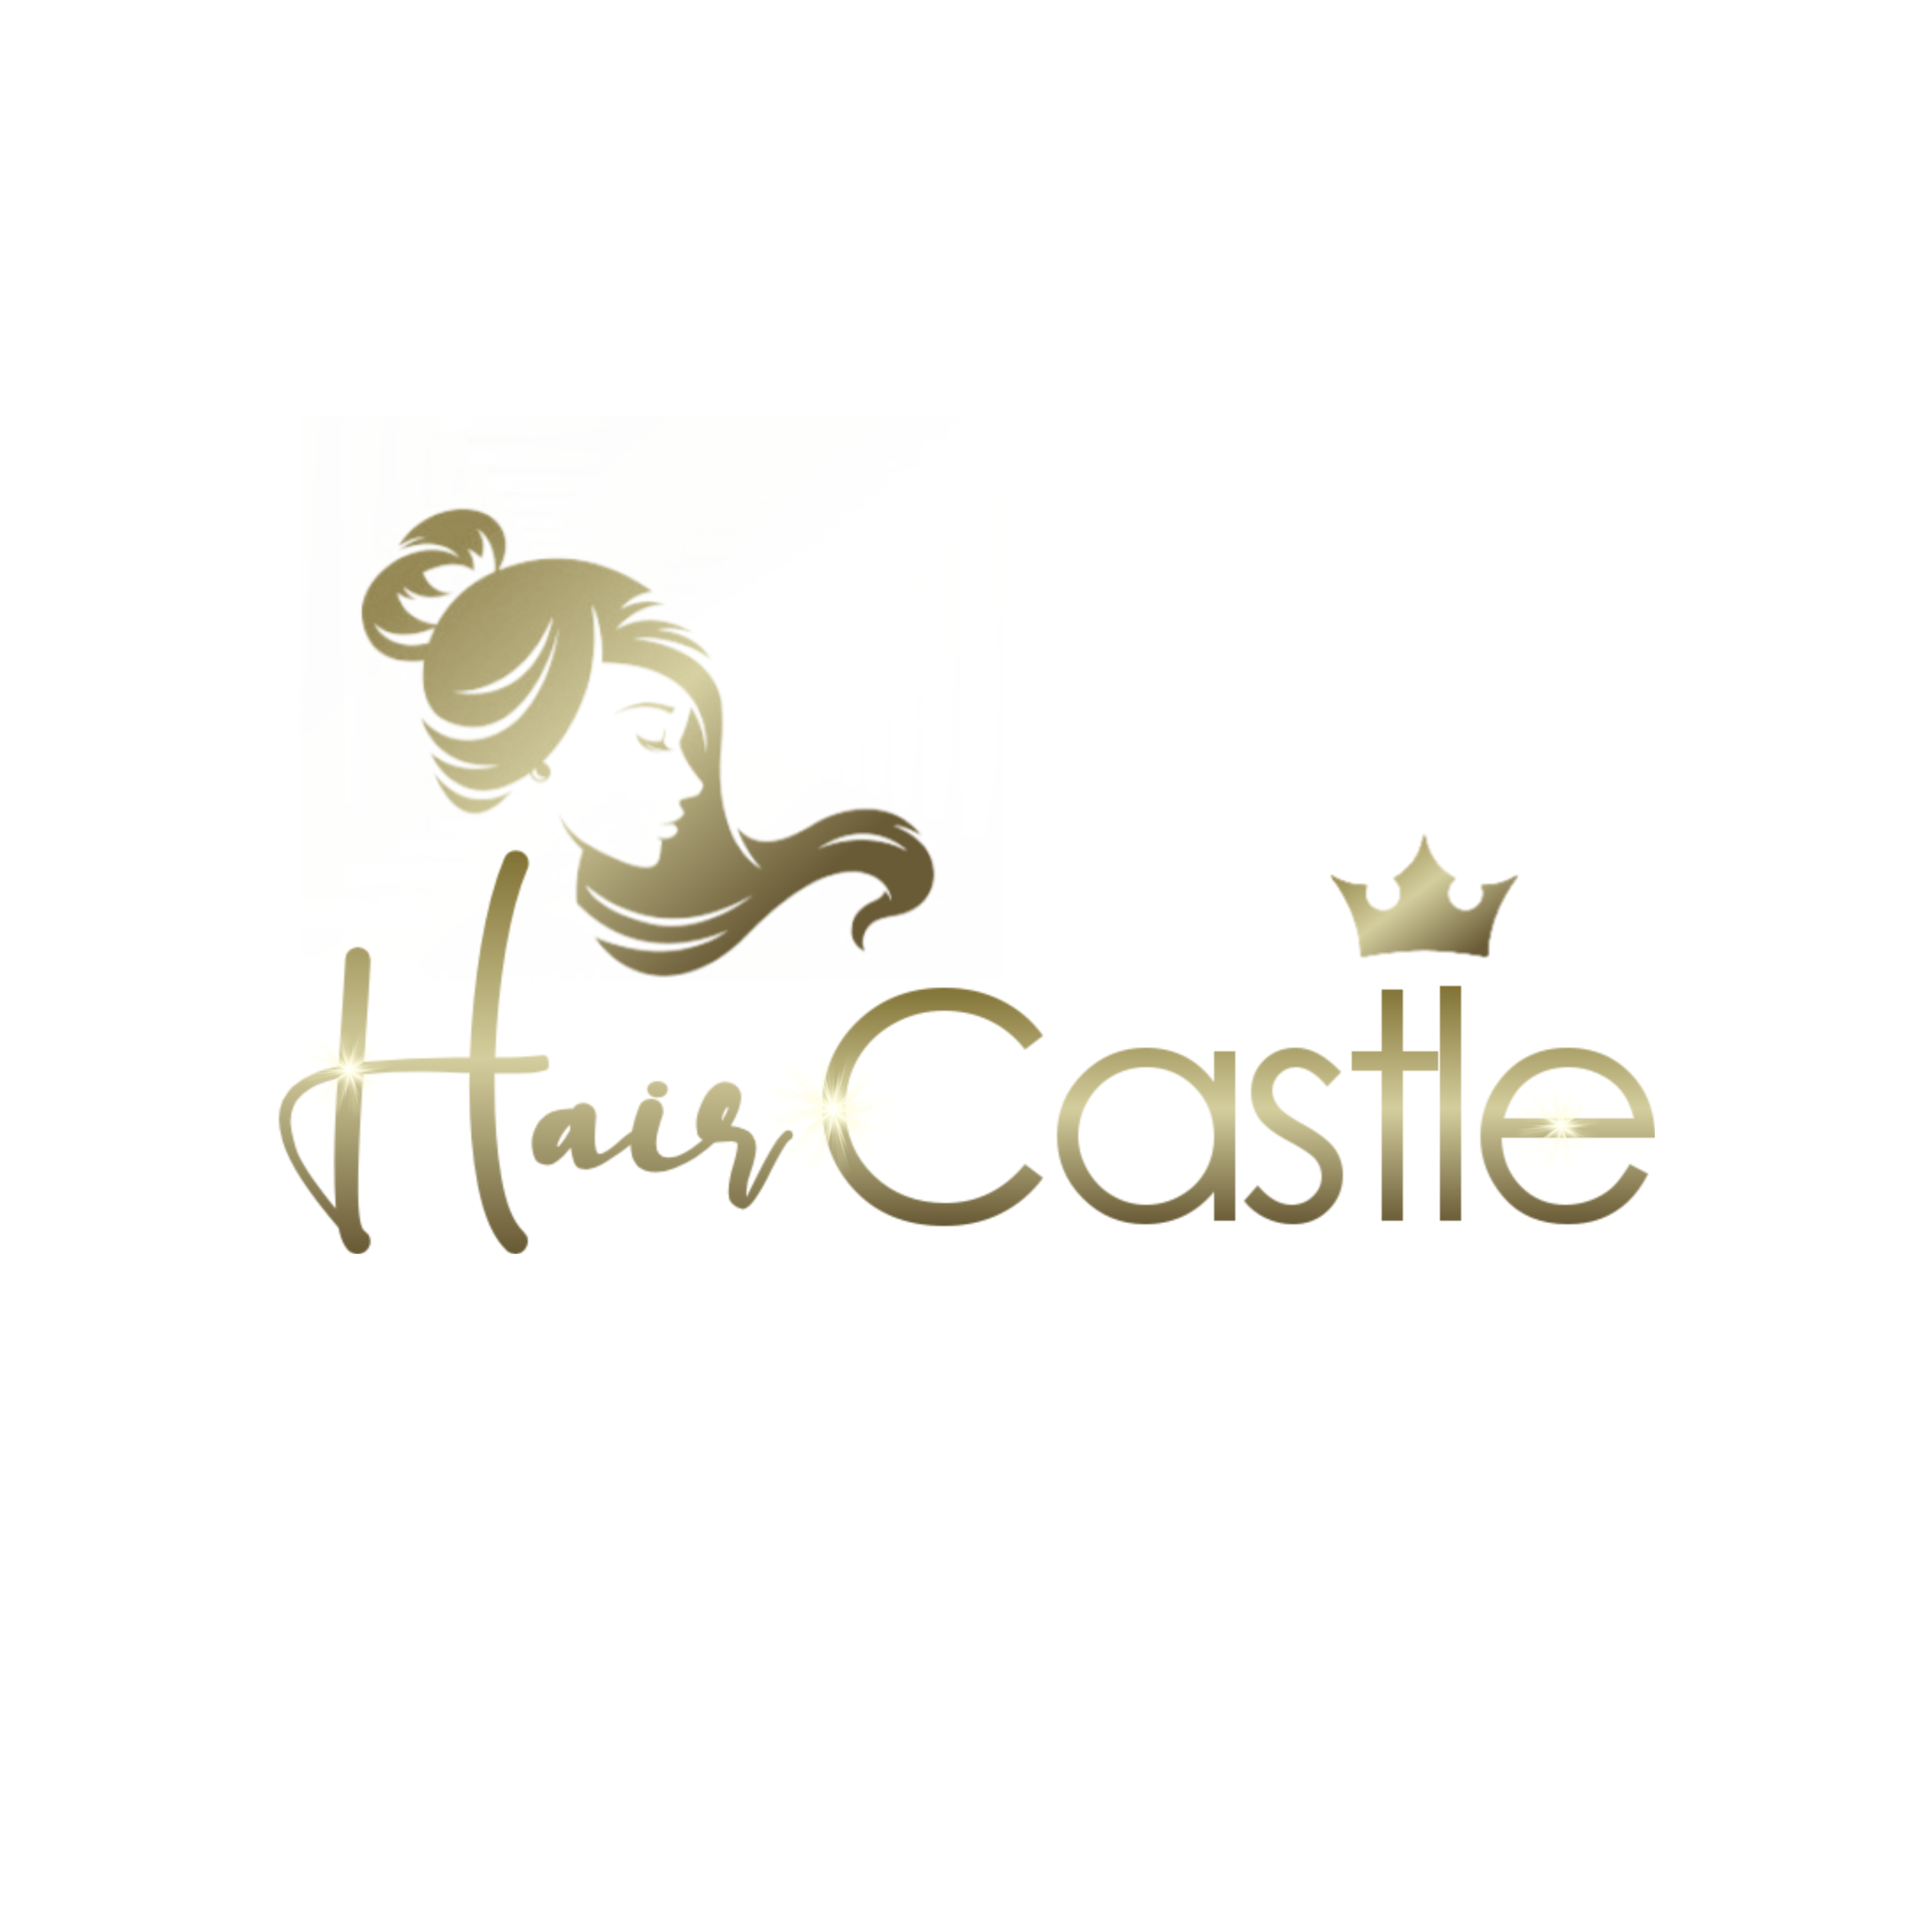 Hair castle logo